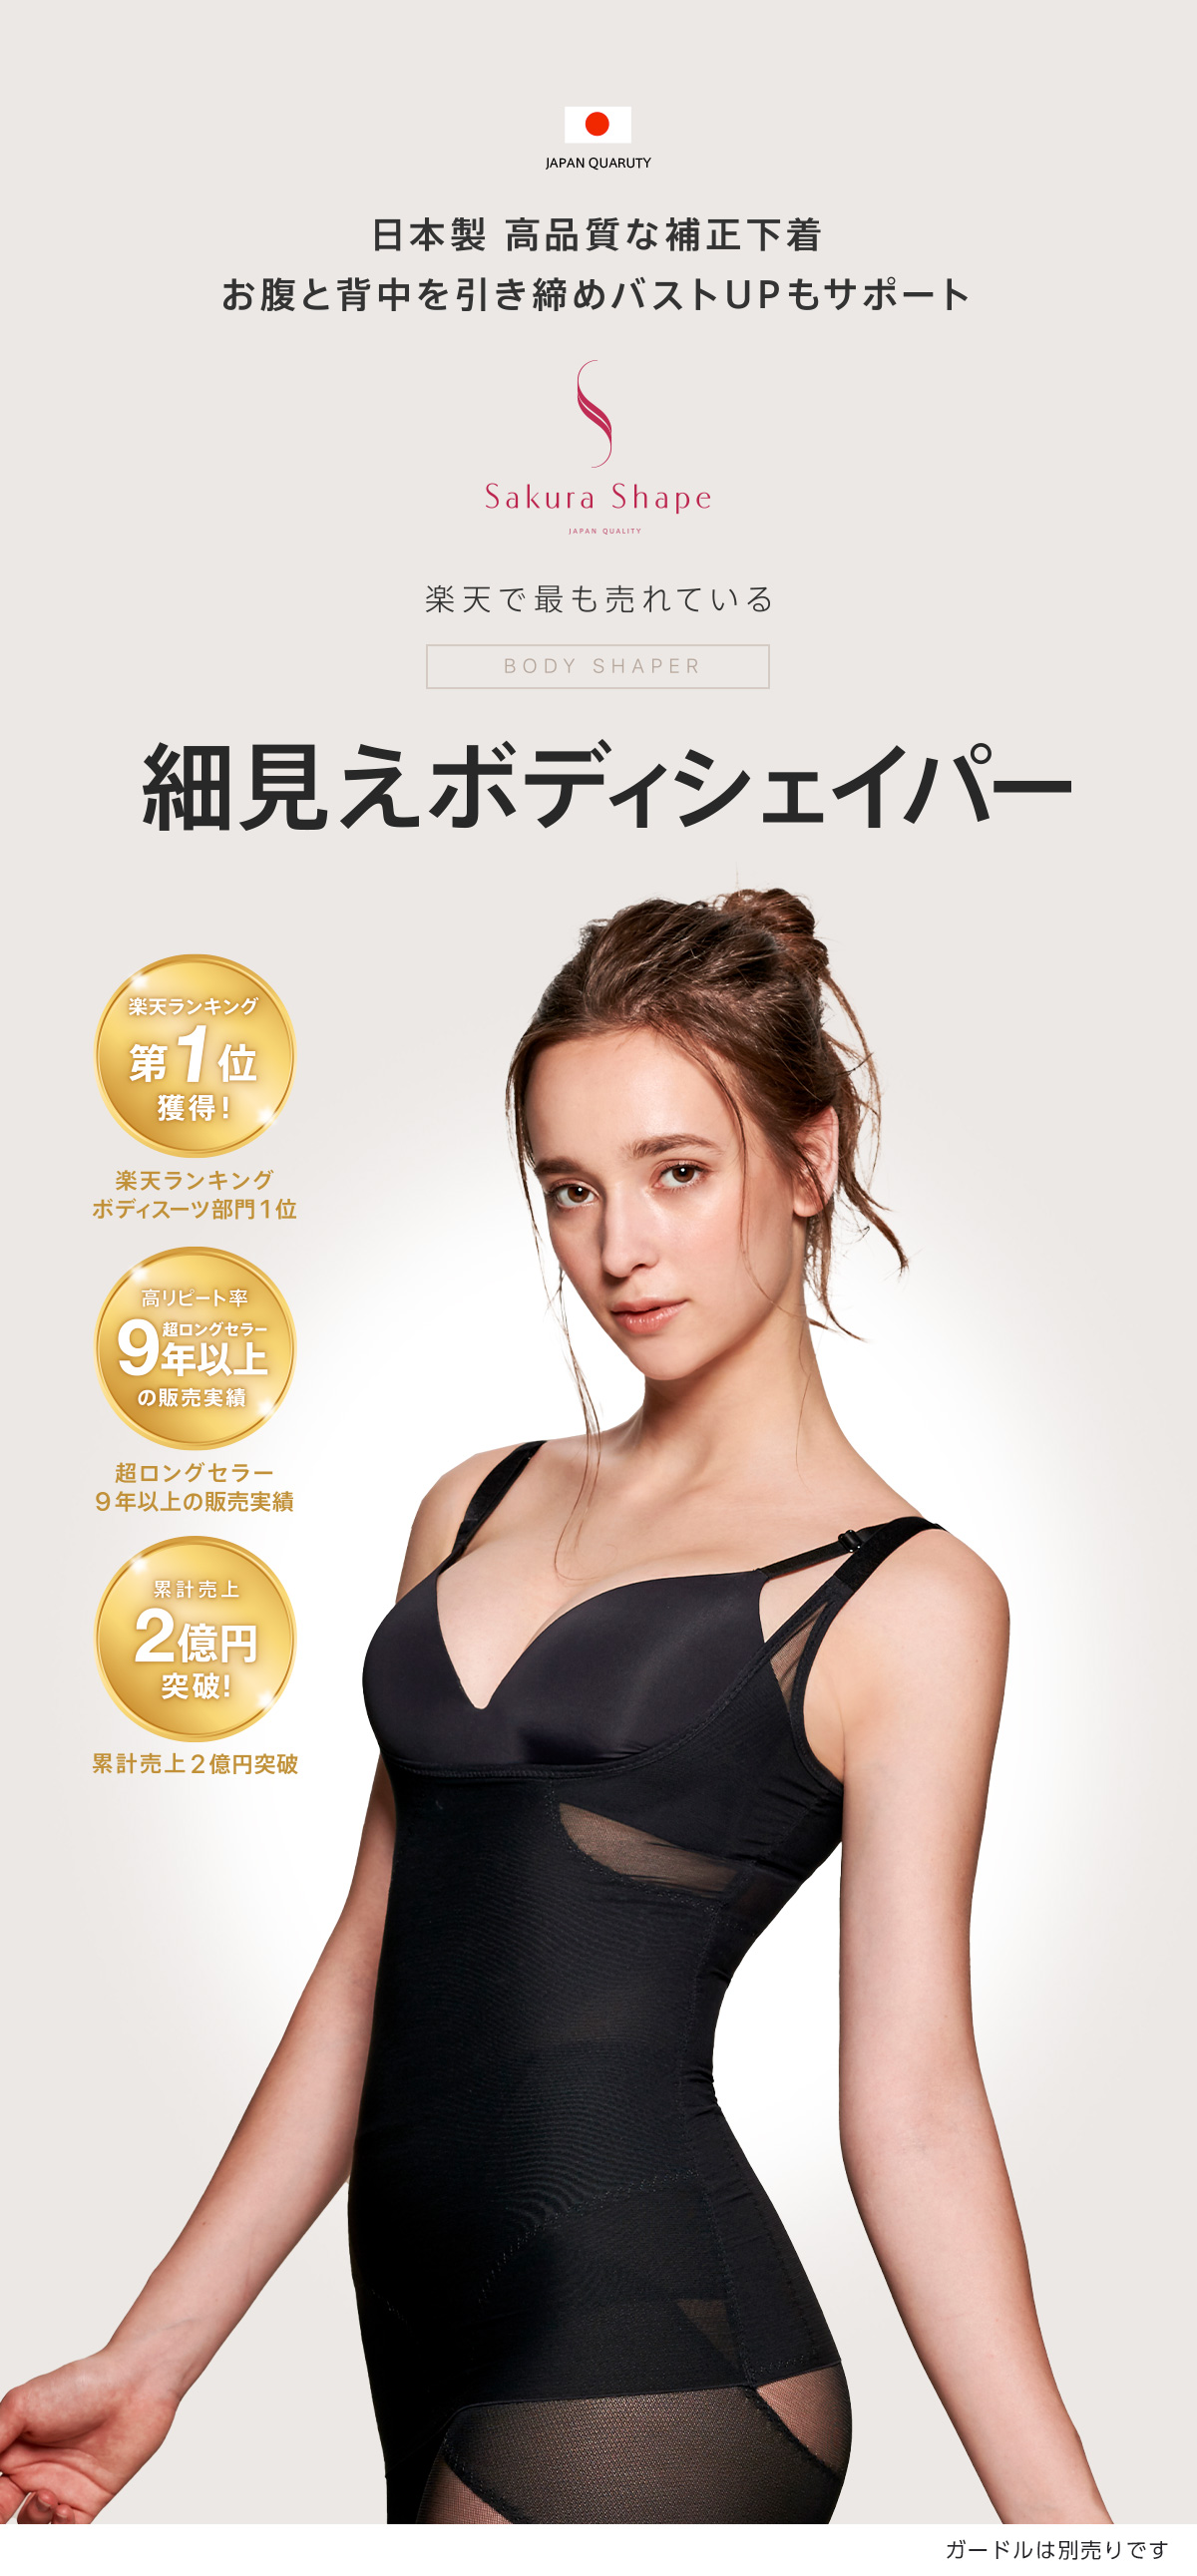 Sakura Shape 日本製 高品質な補正下着。お腹と背中を引き締めバストアップもサポート